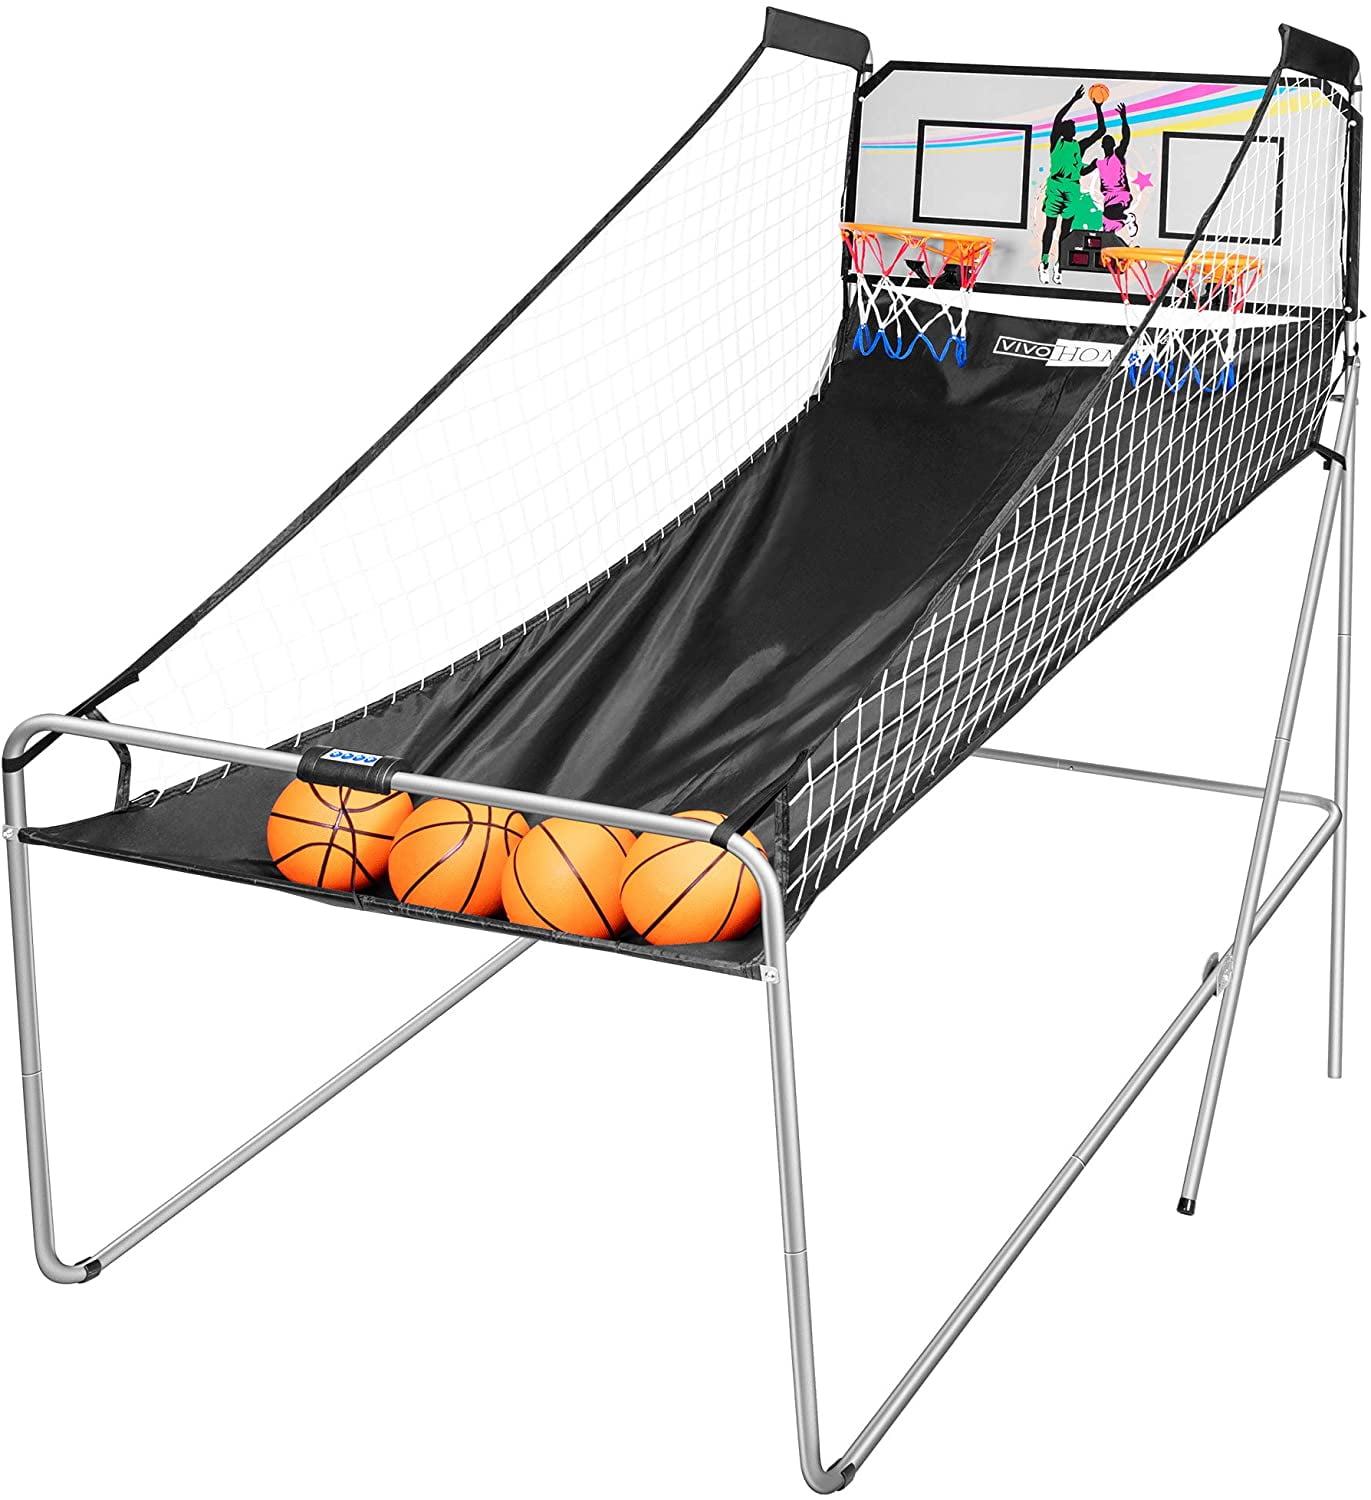 ESPN 81 inch 2-Player Foldable Arcade Basketball Game – Walmart Inventory  Checker – BrickSeek